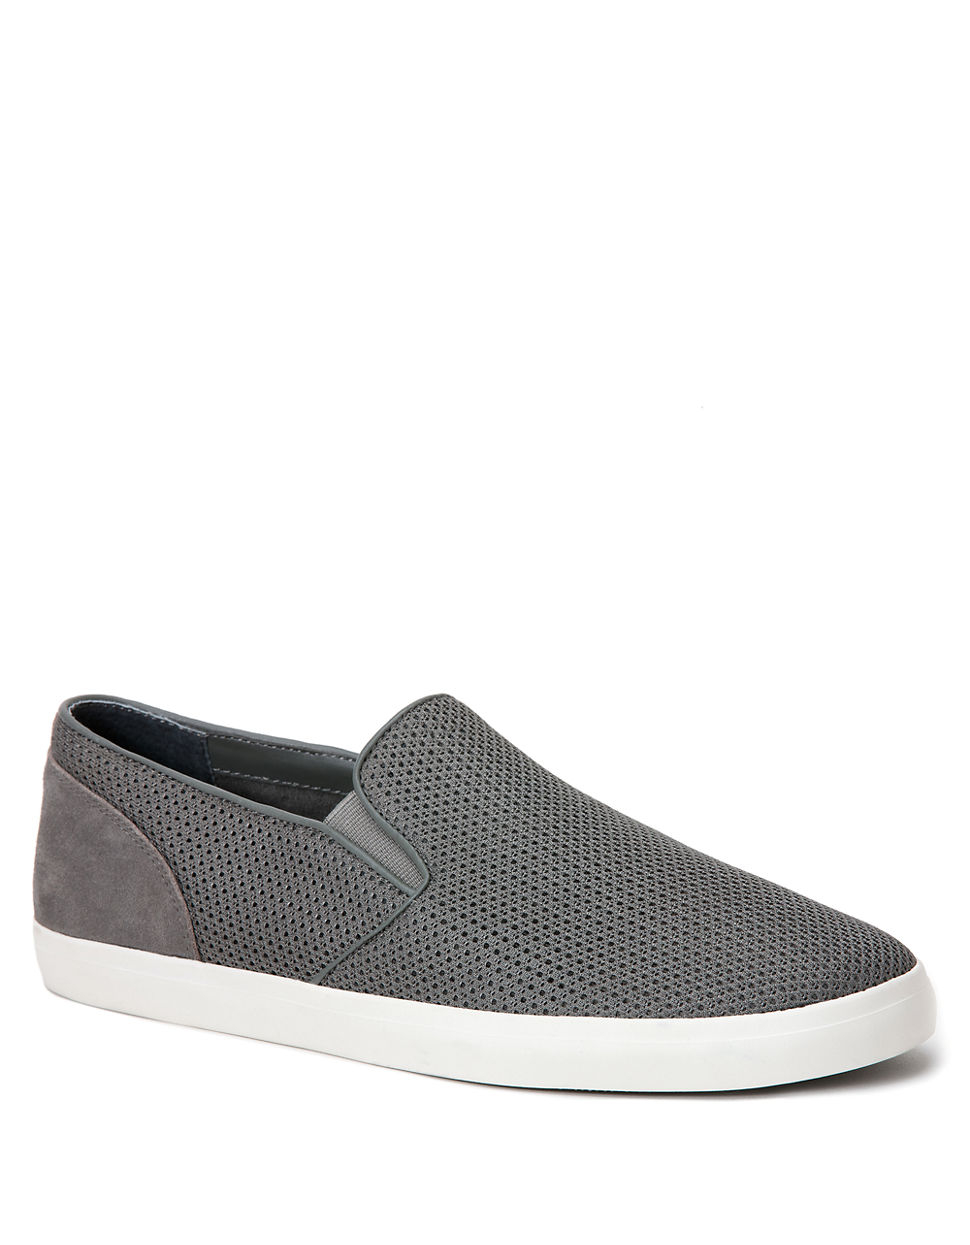 Calvin Klein Mesh Slip-On Sneakers in Grey (Gray) for Men - Lyst